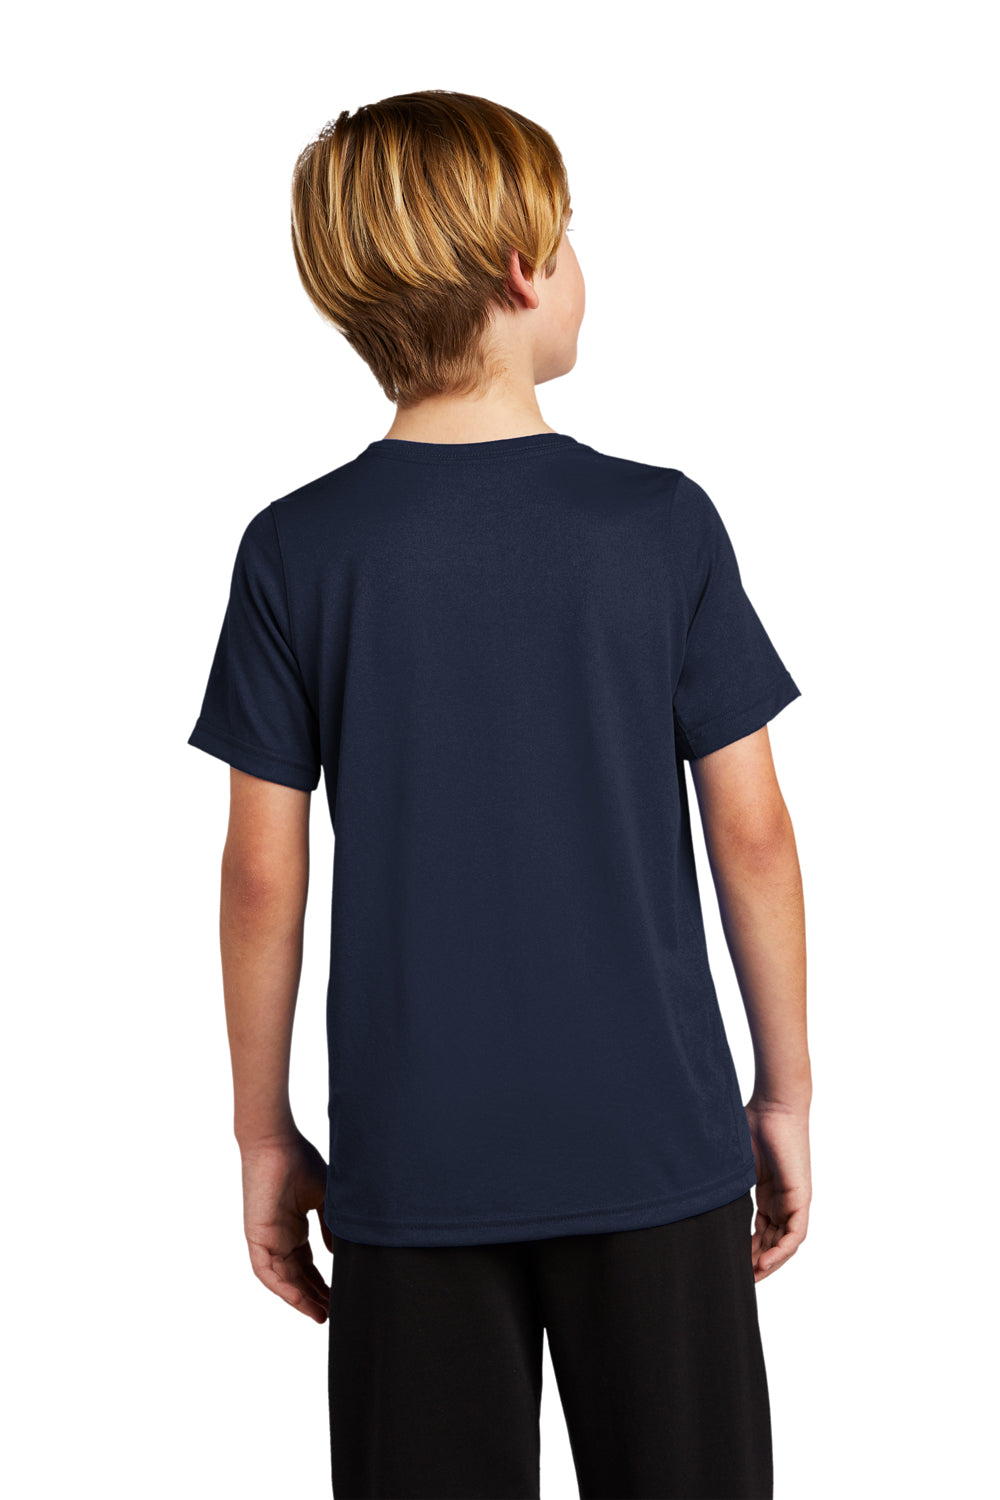 Nike 840178 Youth Legend Dri-Fit Moisture Wicking Short Sleeve Crewneck T-Shirt College Navy Blue Model Back